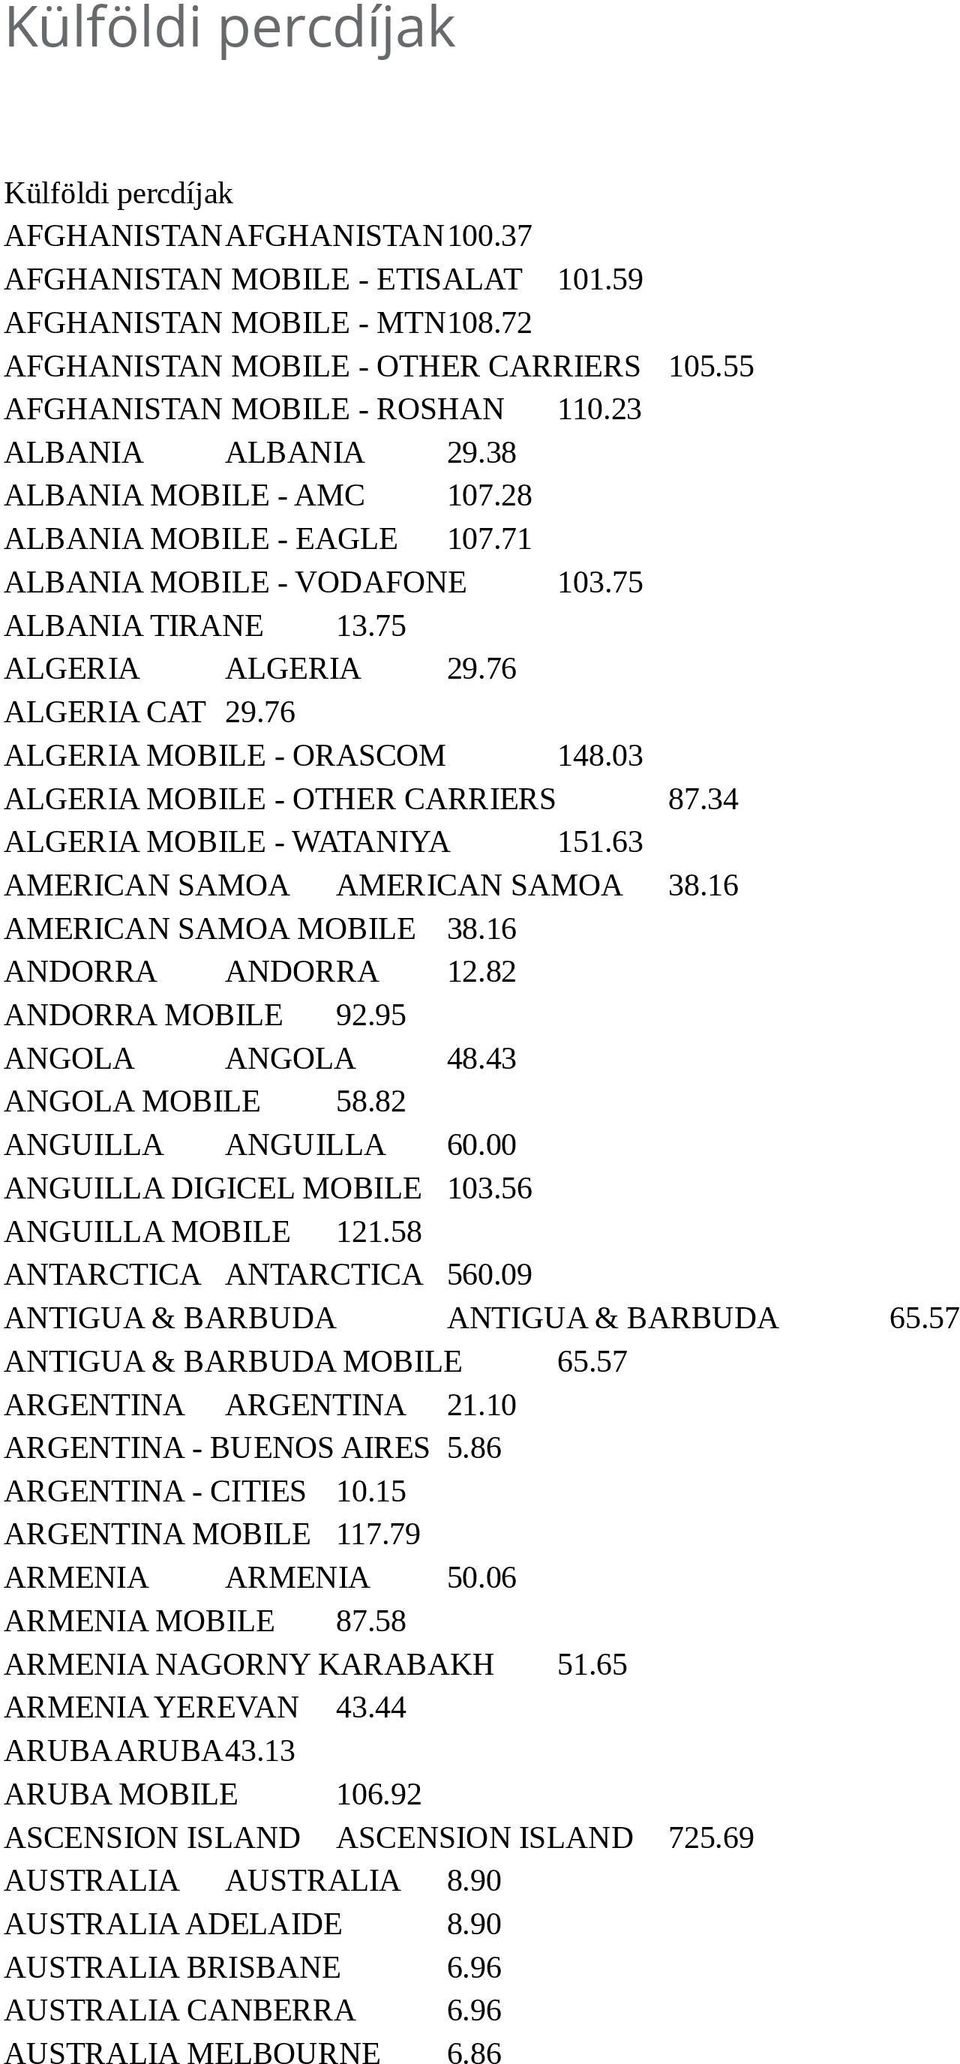 76 ALGERIA CAT 29.76 ALGERIA MOBILE - ORASCOM 148.03 ALGERIA MOBILE - OTHER CARRIERS 87.34 ALGERIA MOBILE - WATANIYA 151.63 AMERICAN SAMOA AMERICAN SAMOA 38.16 AMERICAN SAMOA MOBILE 38.